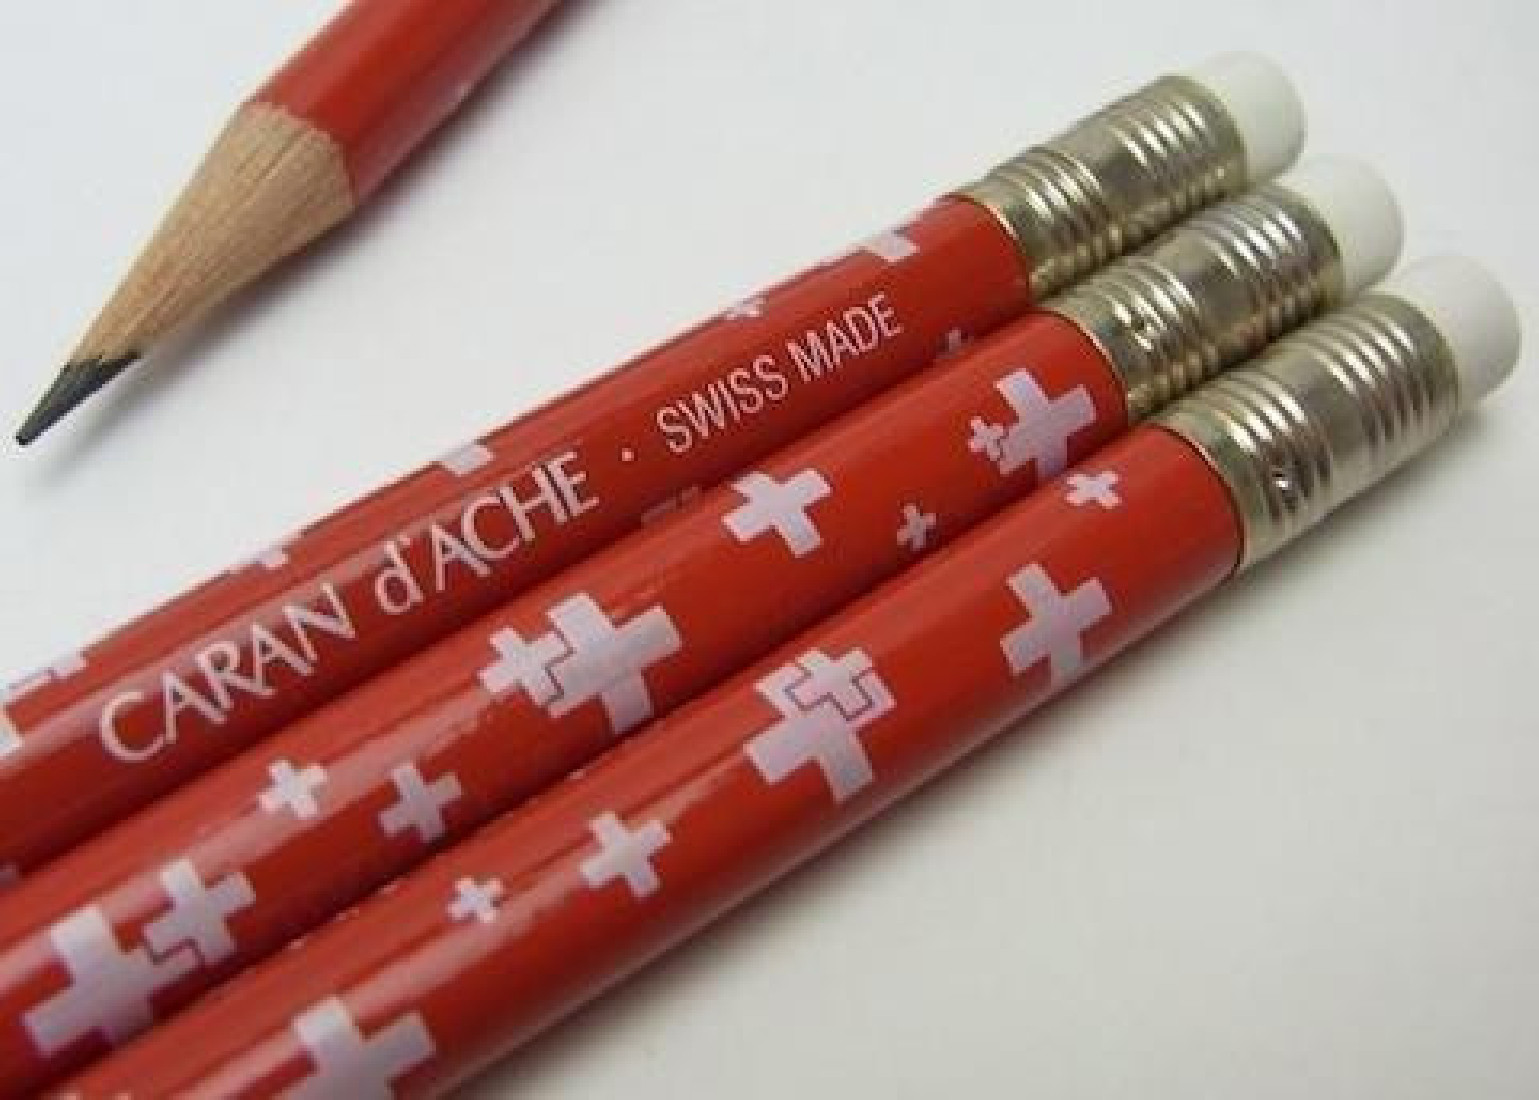 Swiss flag pencil HB red 0342.112 Caran dache